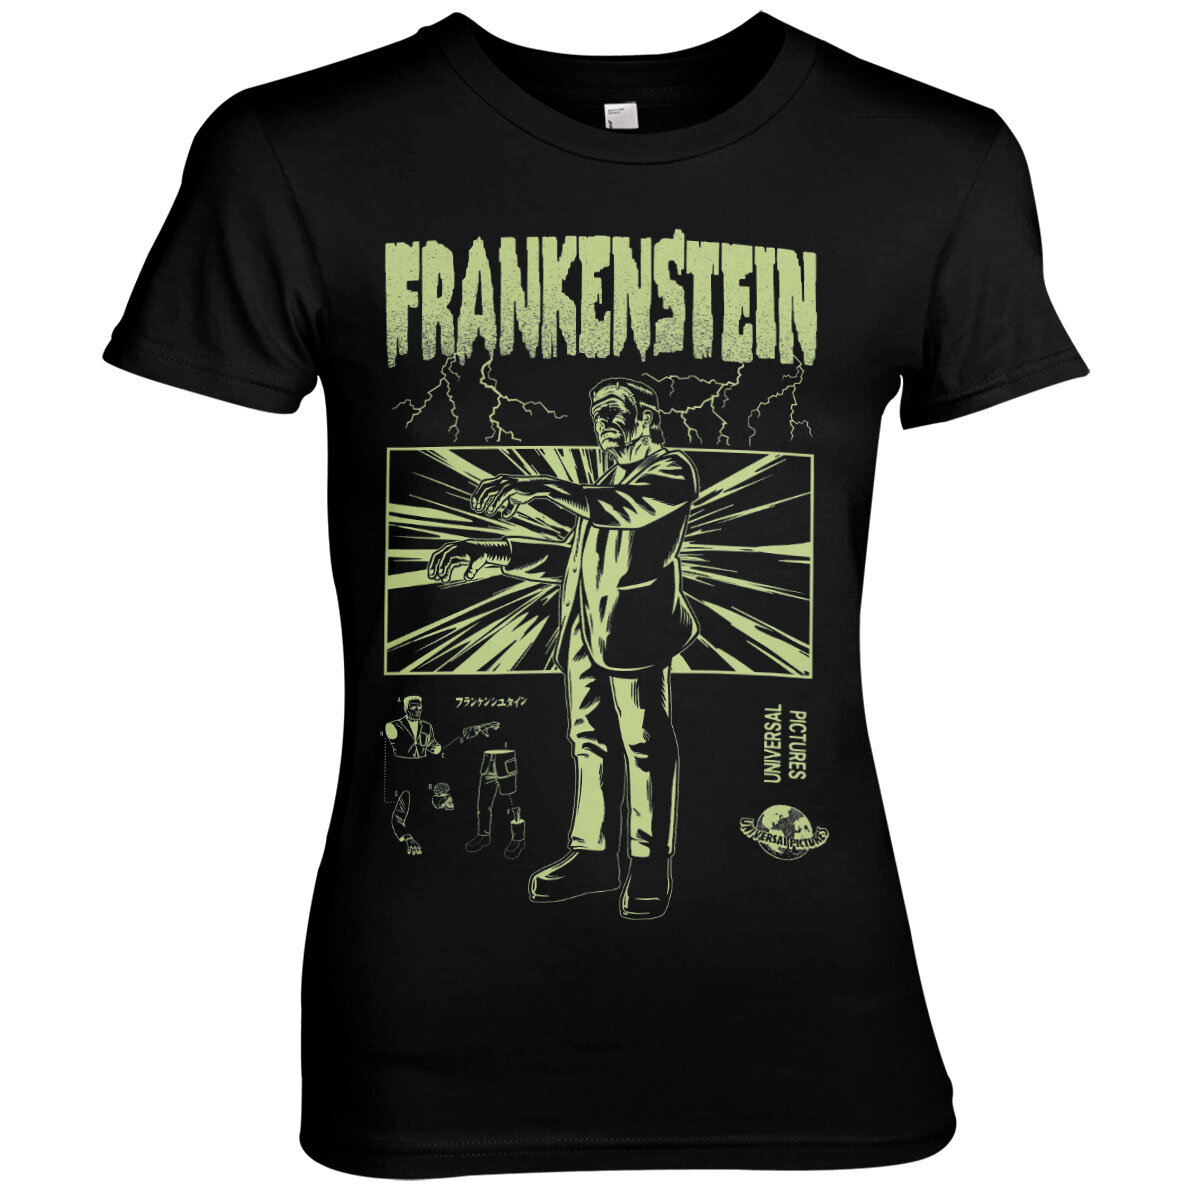 Frankenstein Retro Girly Tee